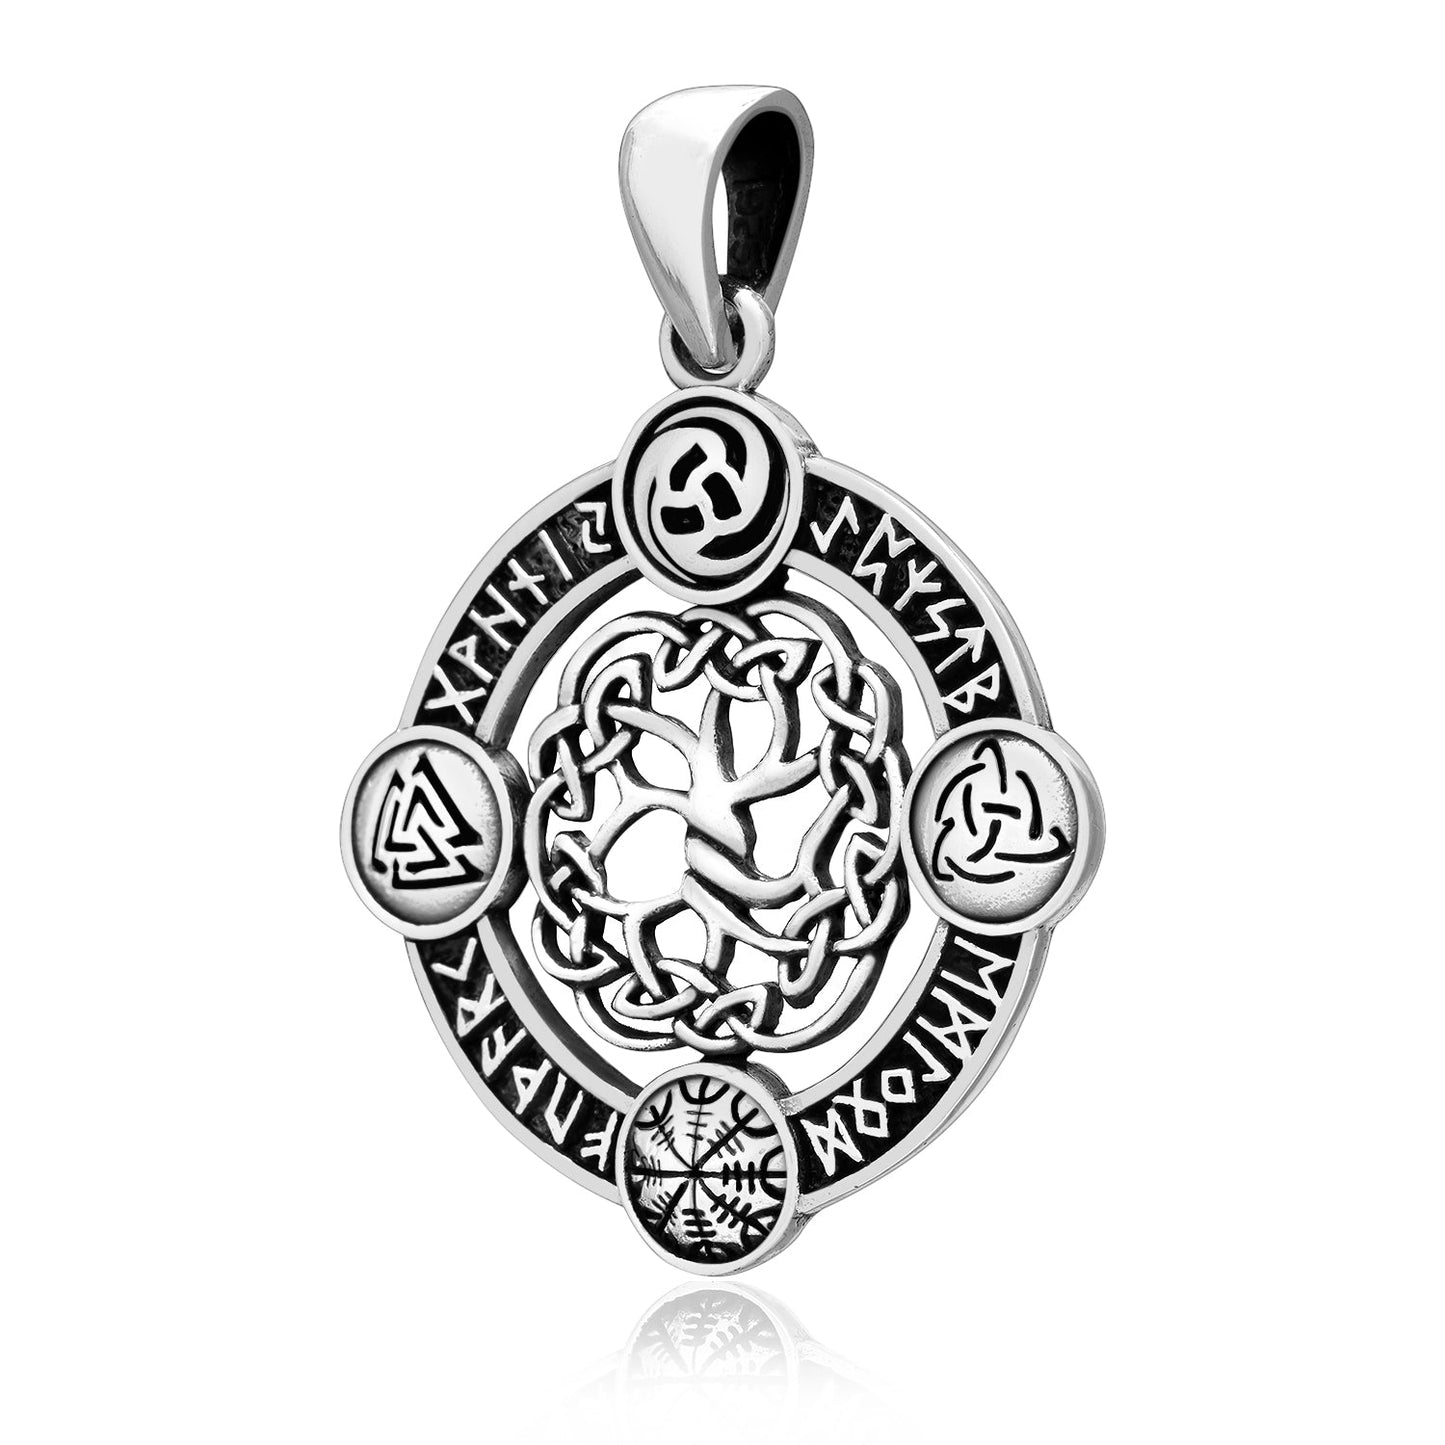 925 Silver Yggdrasil Pendant with Pagan Symbols and Runes - SilverMania925